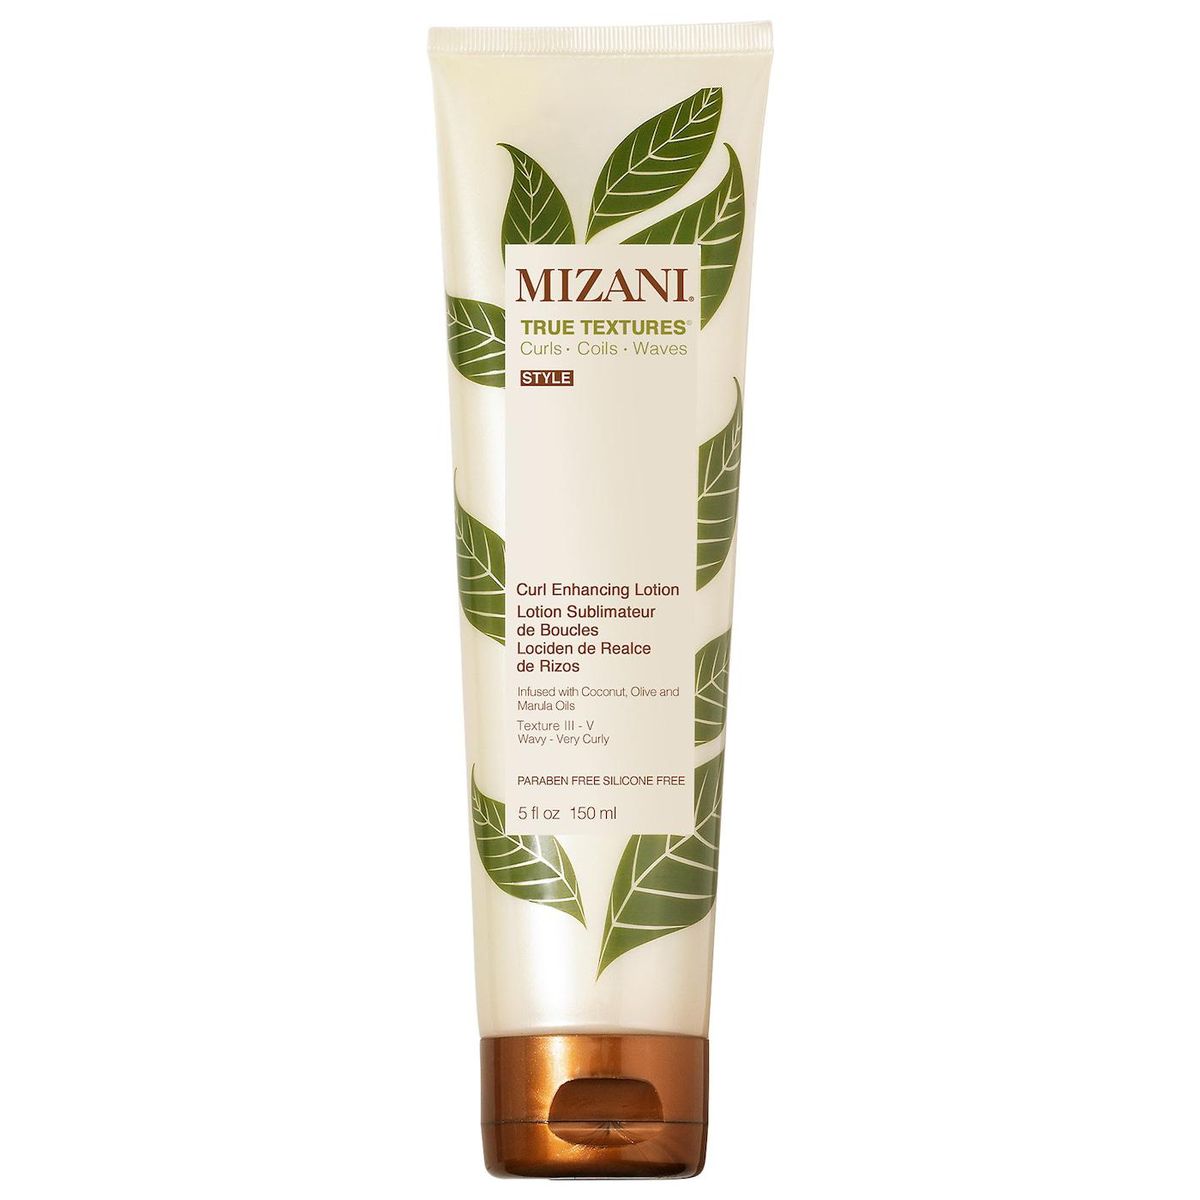 Mizani curl enhancing lotion